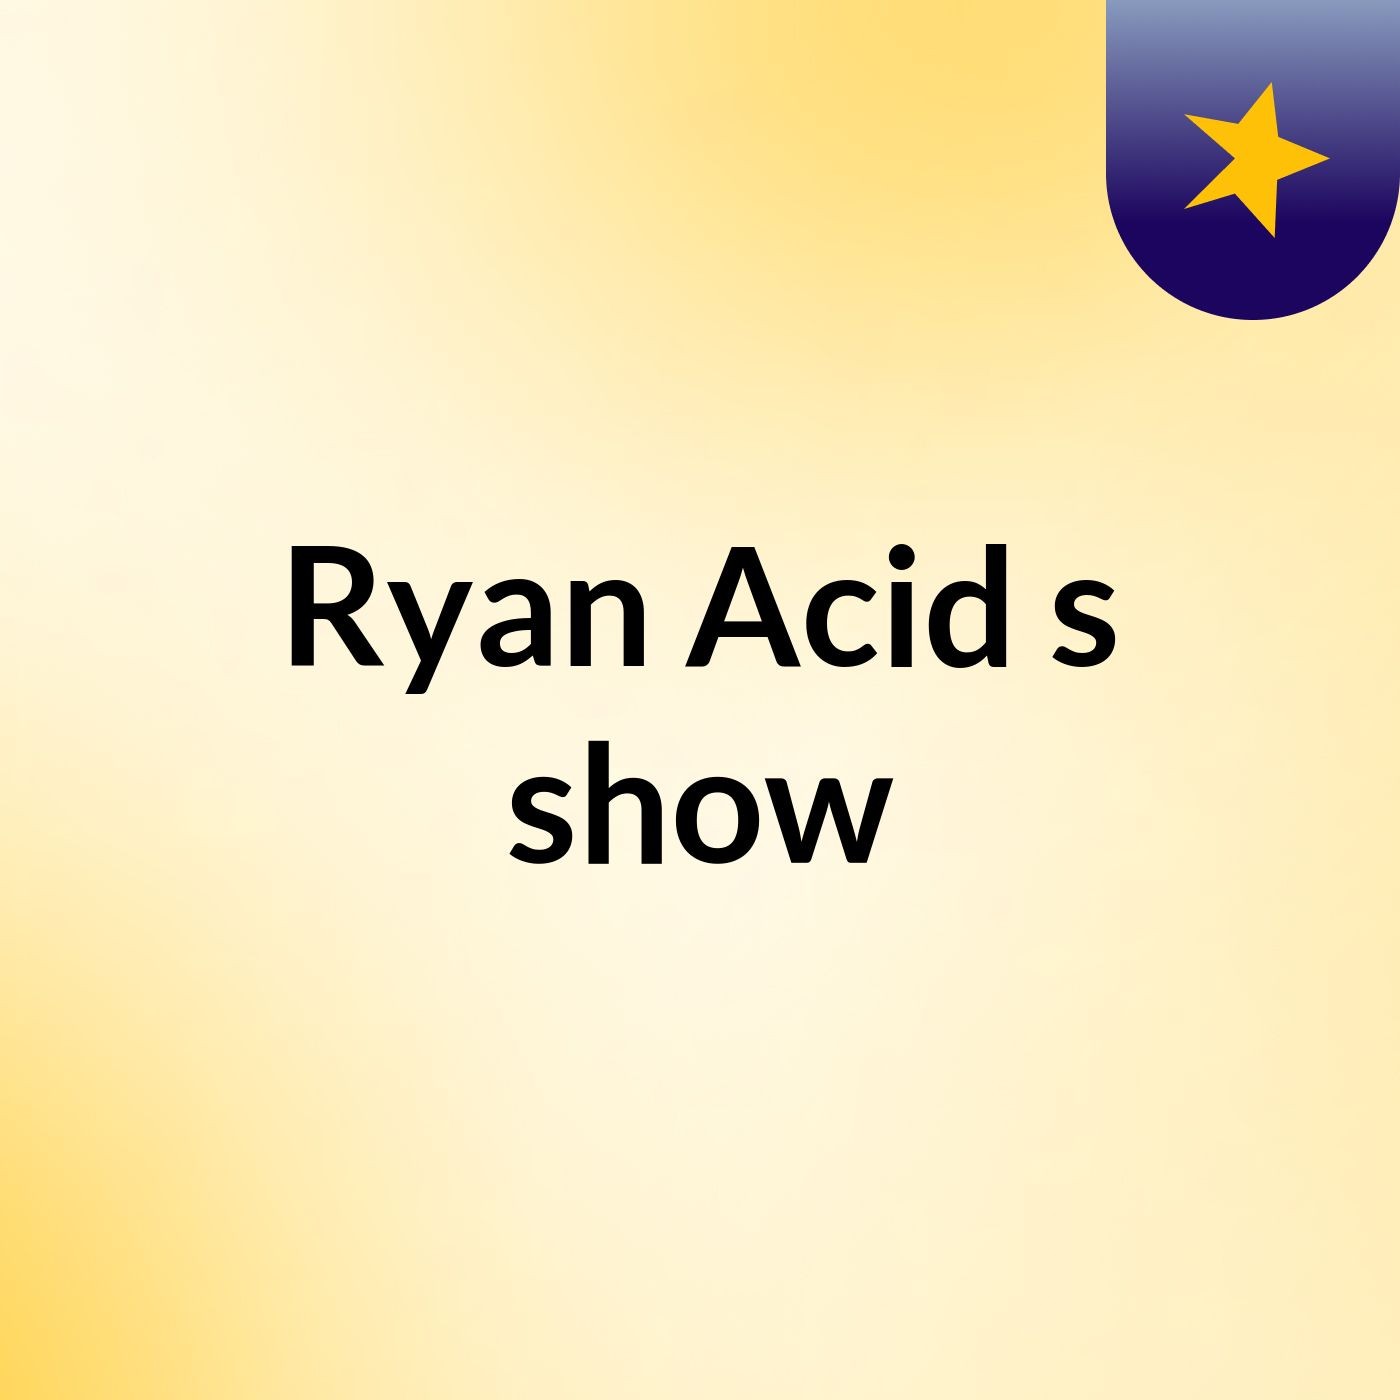 Ryan Acid's show